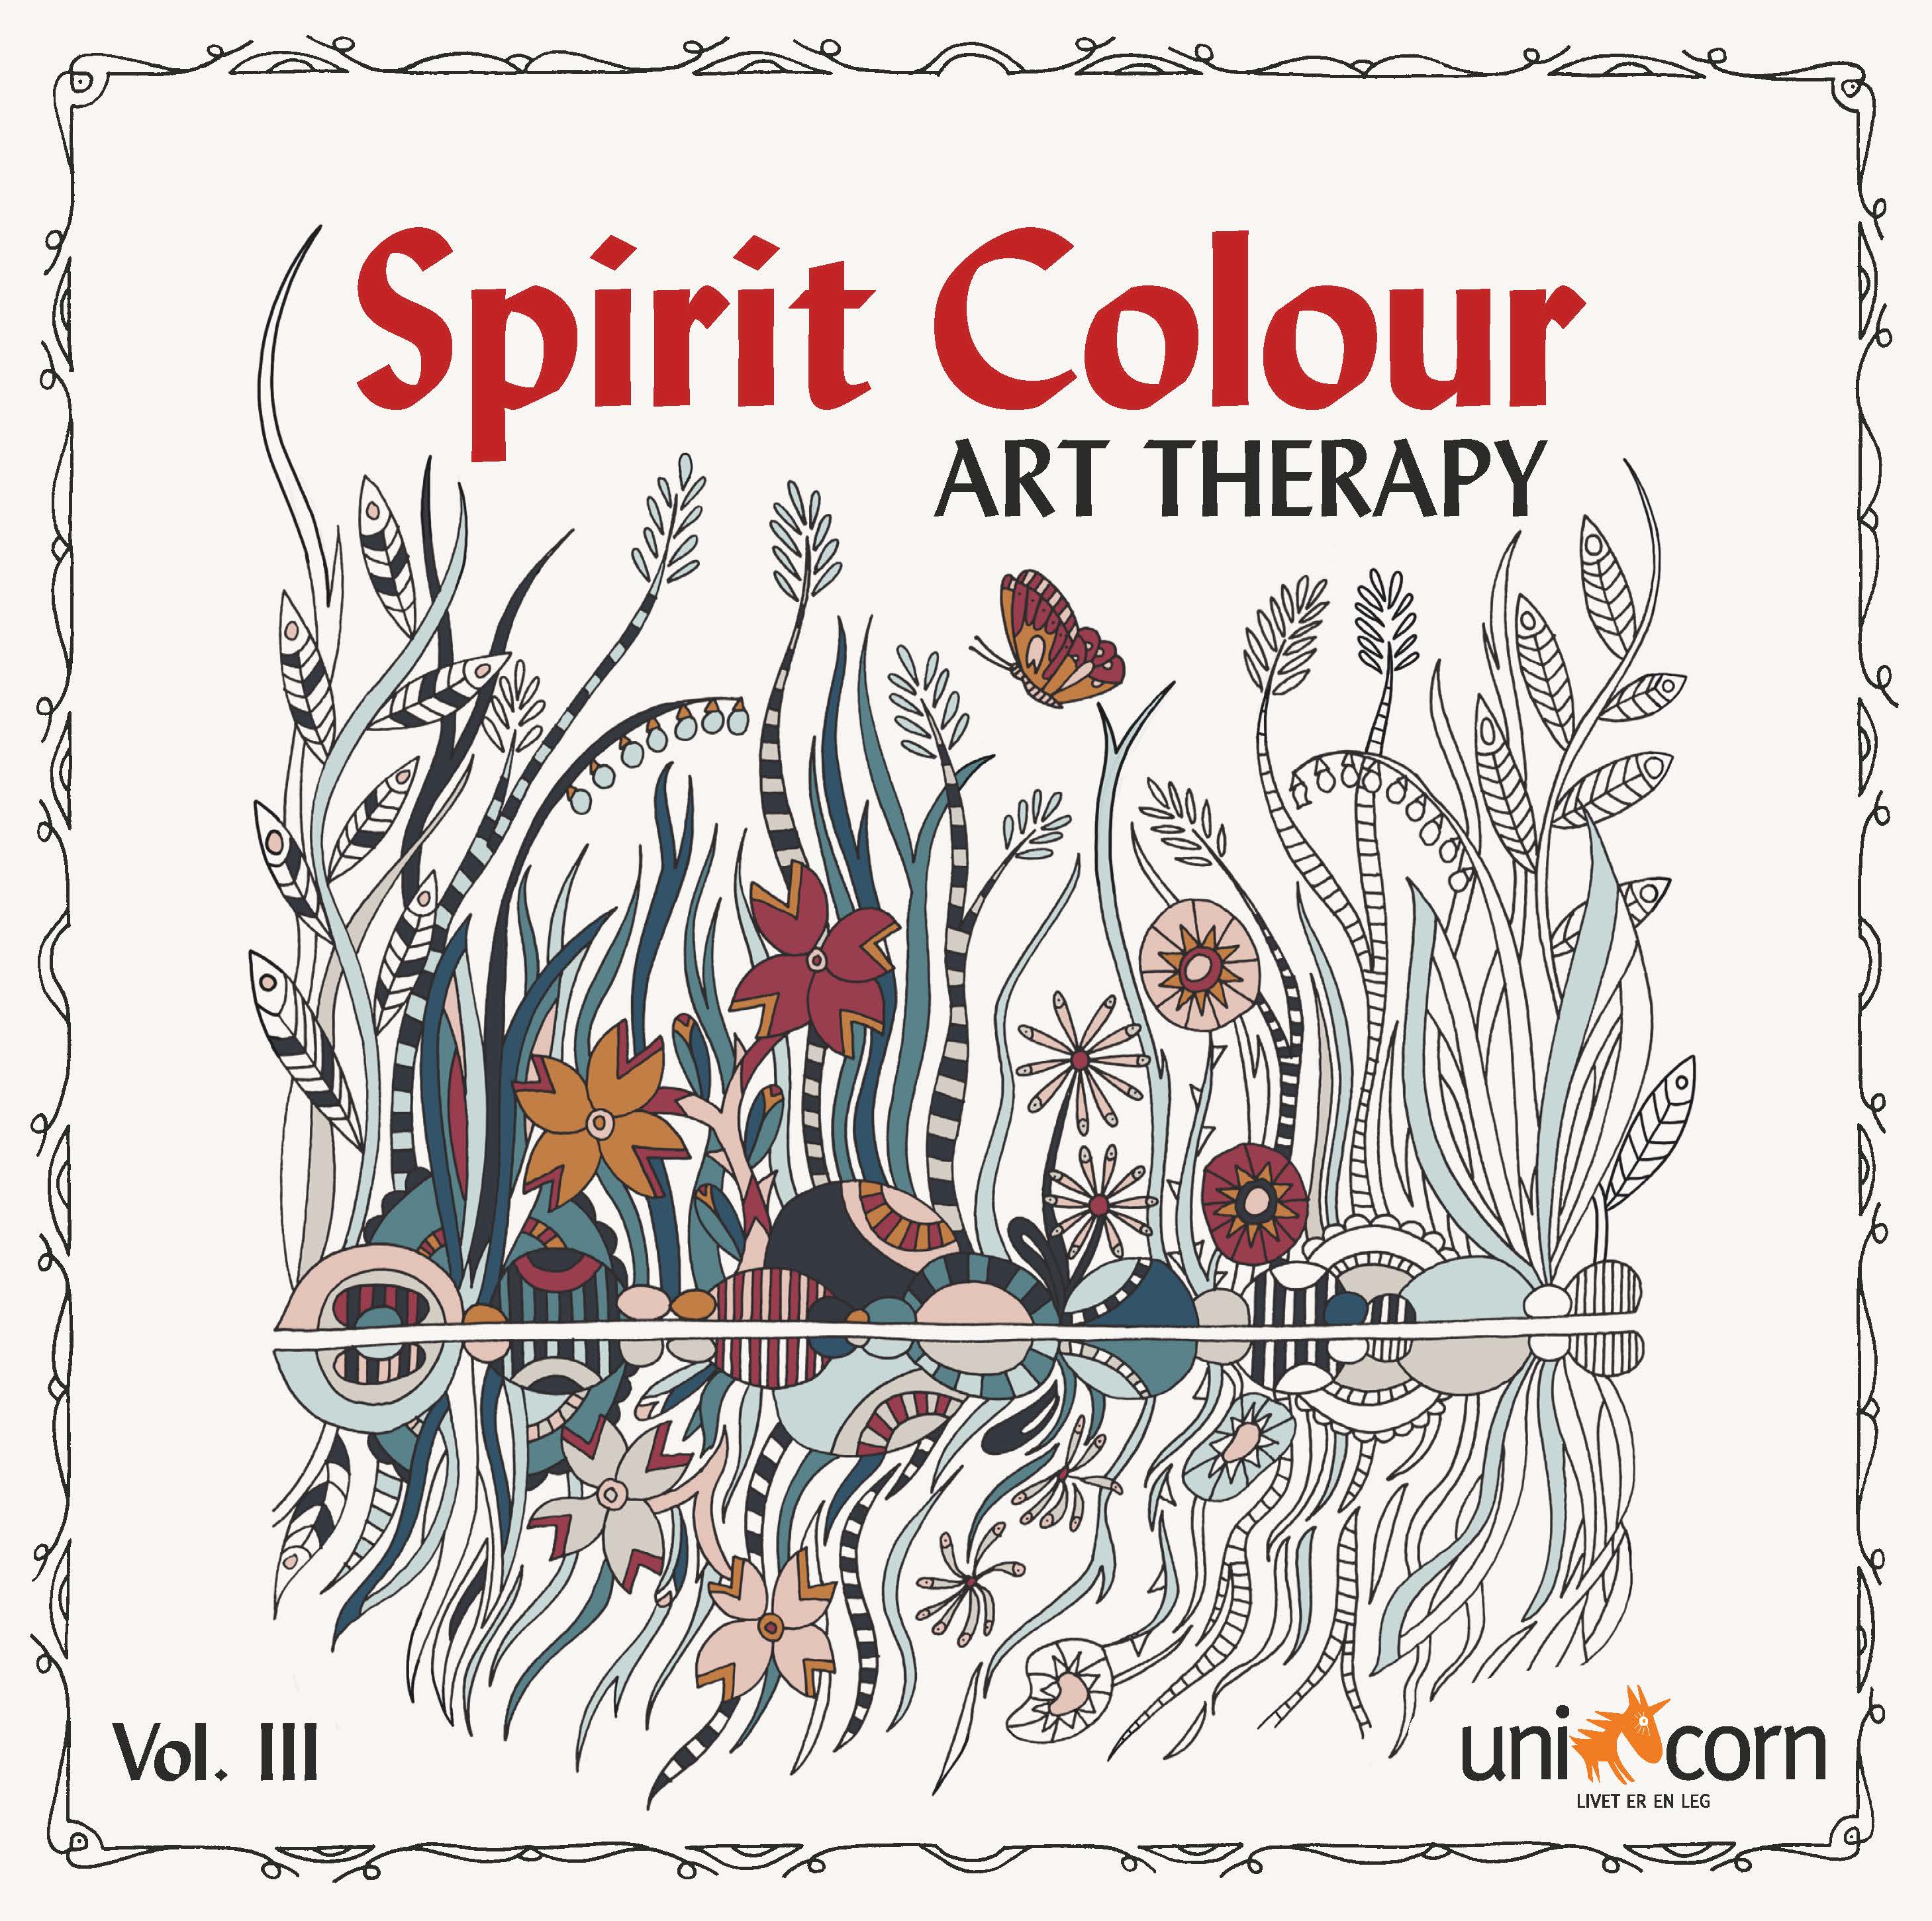 Mandalas - Spirit Colour Art Therapy Vol. III (104933) - Leker